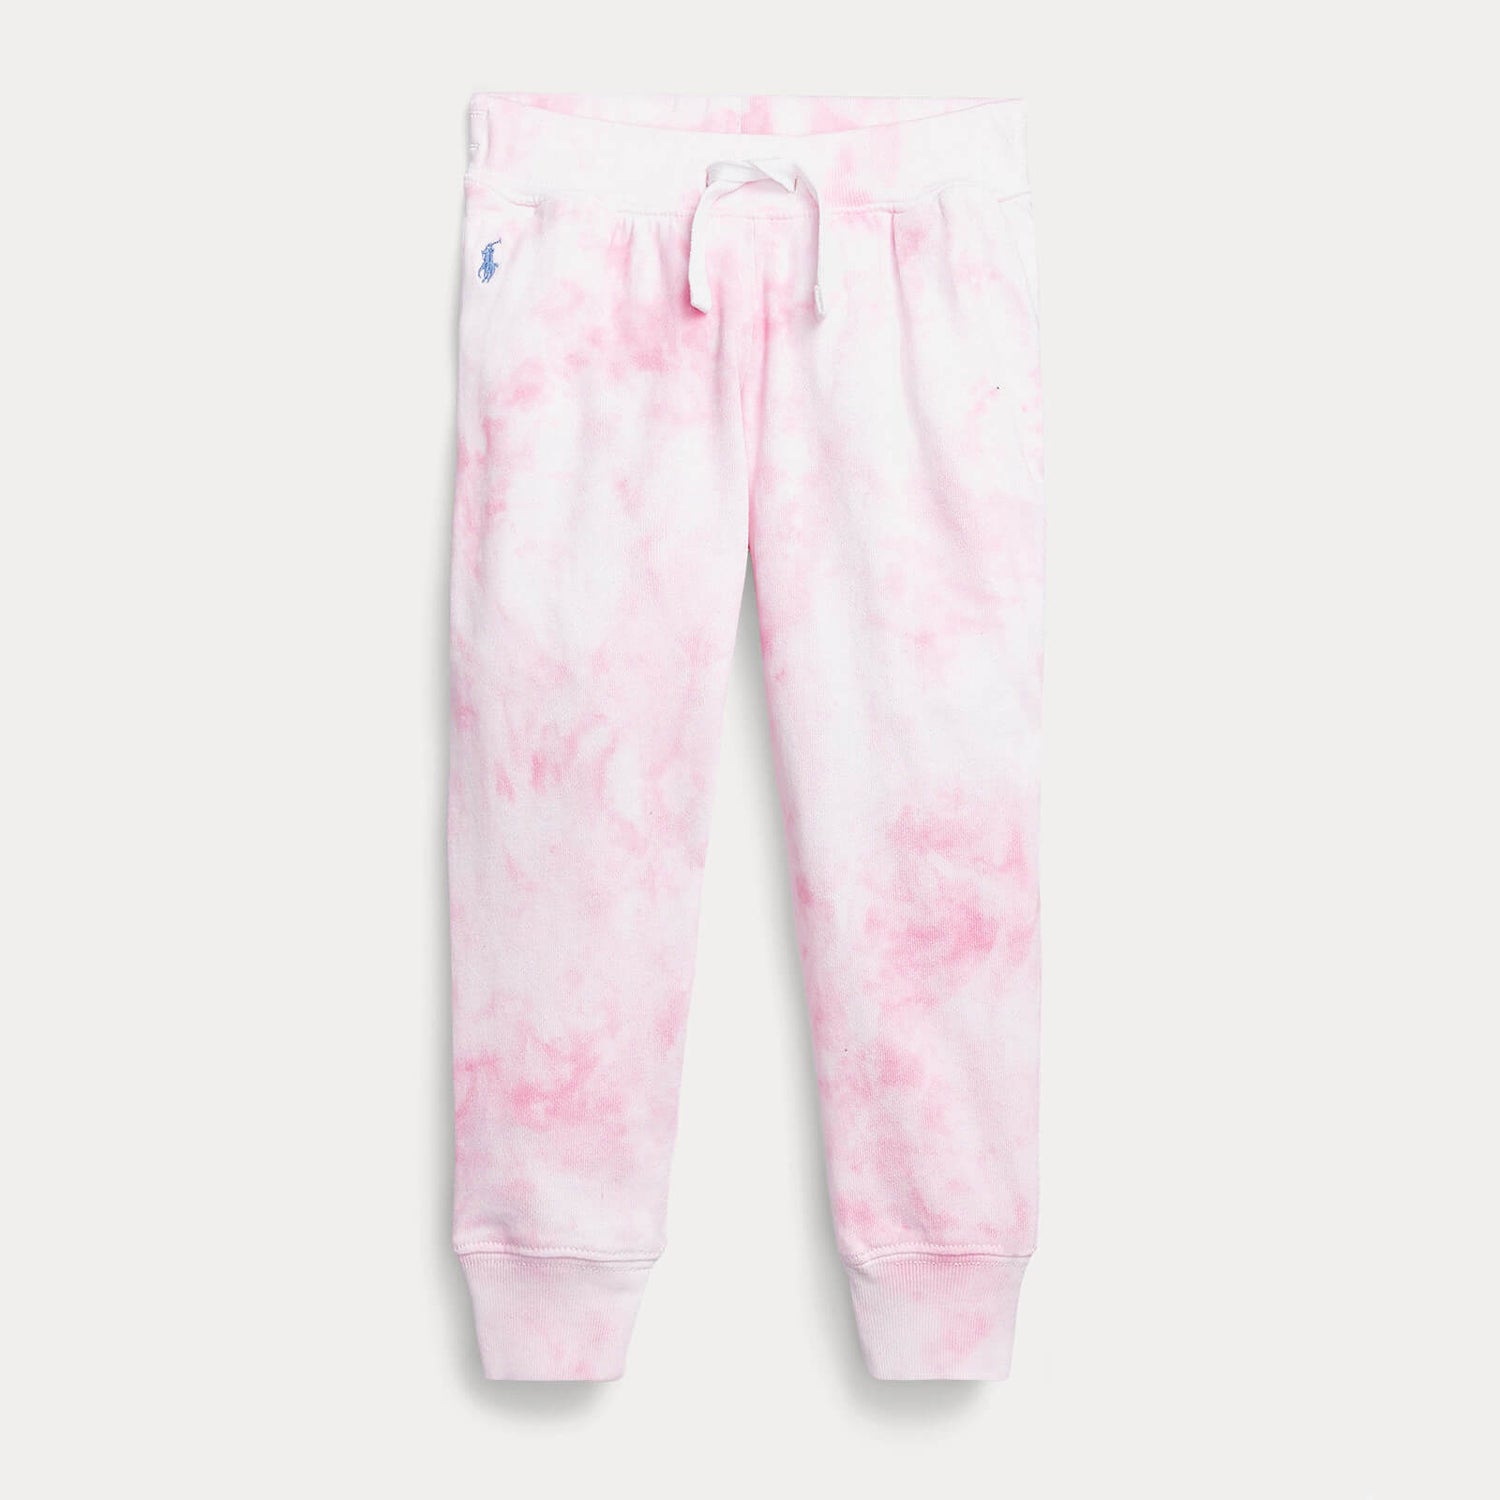 Polo Ralph Lauren Girls' Tie Dye Athletic Pants - Carmel Pink - 6 Years